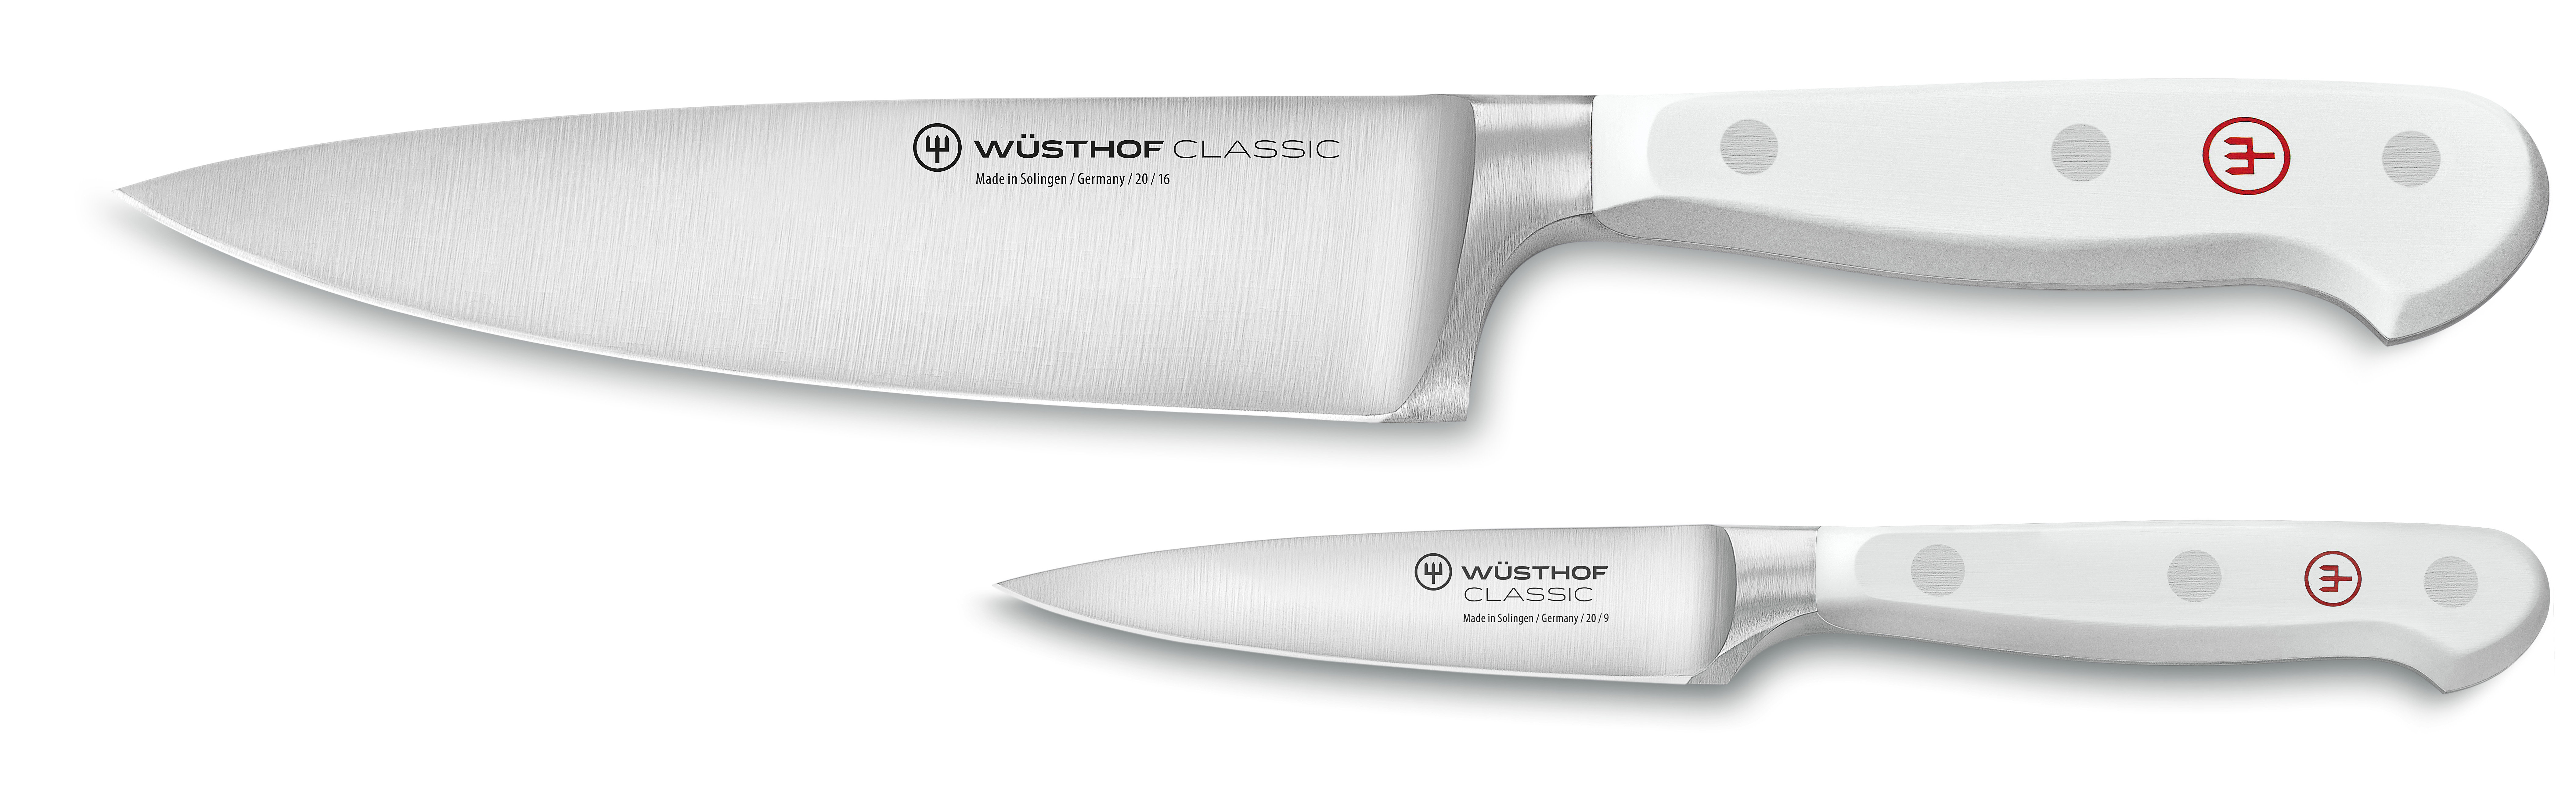 Wüsthof Classic 2 Piece Prep Knife Set